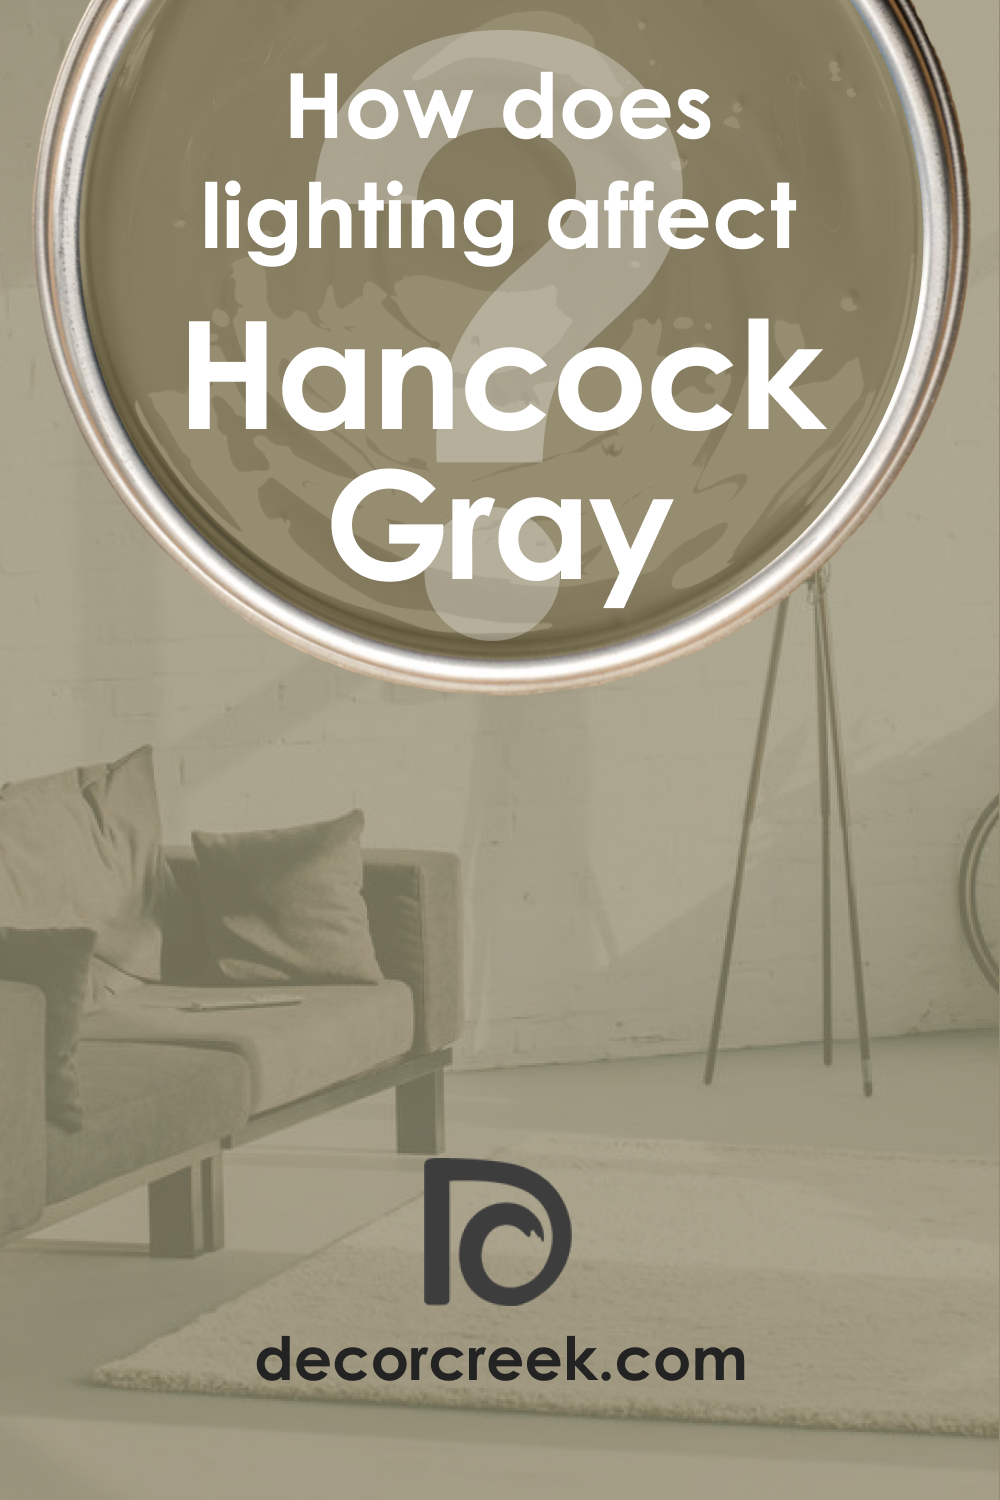 How Does Lighting Affect Hancock Gray HC-97?